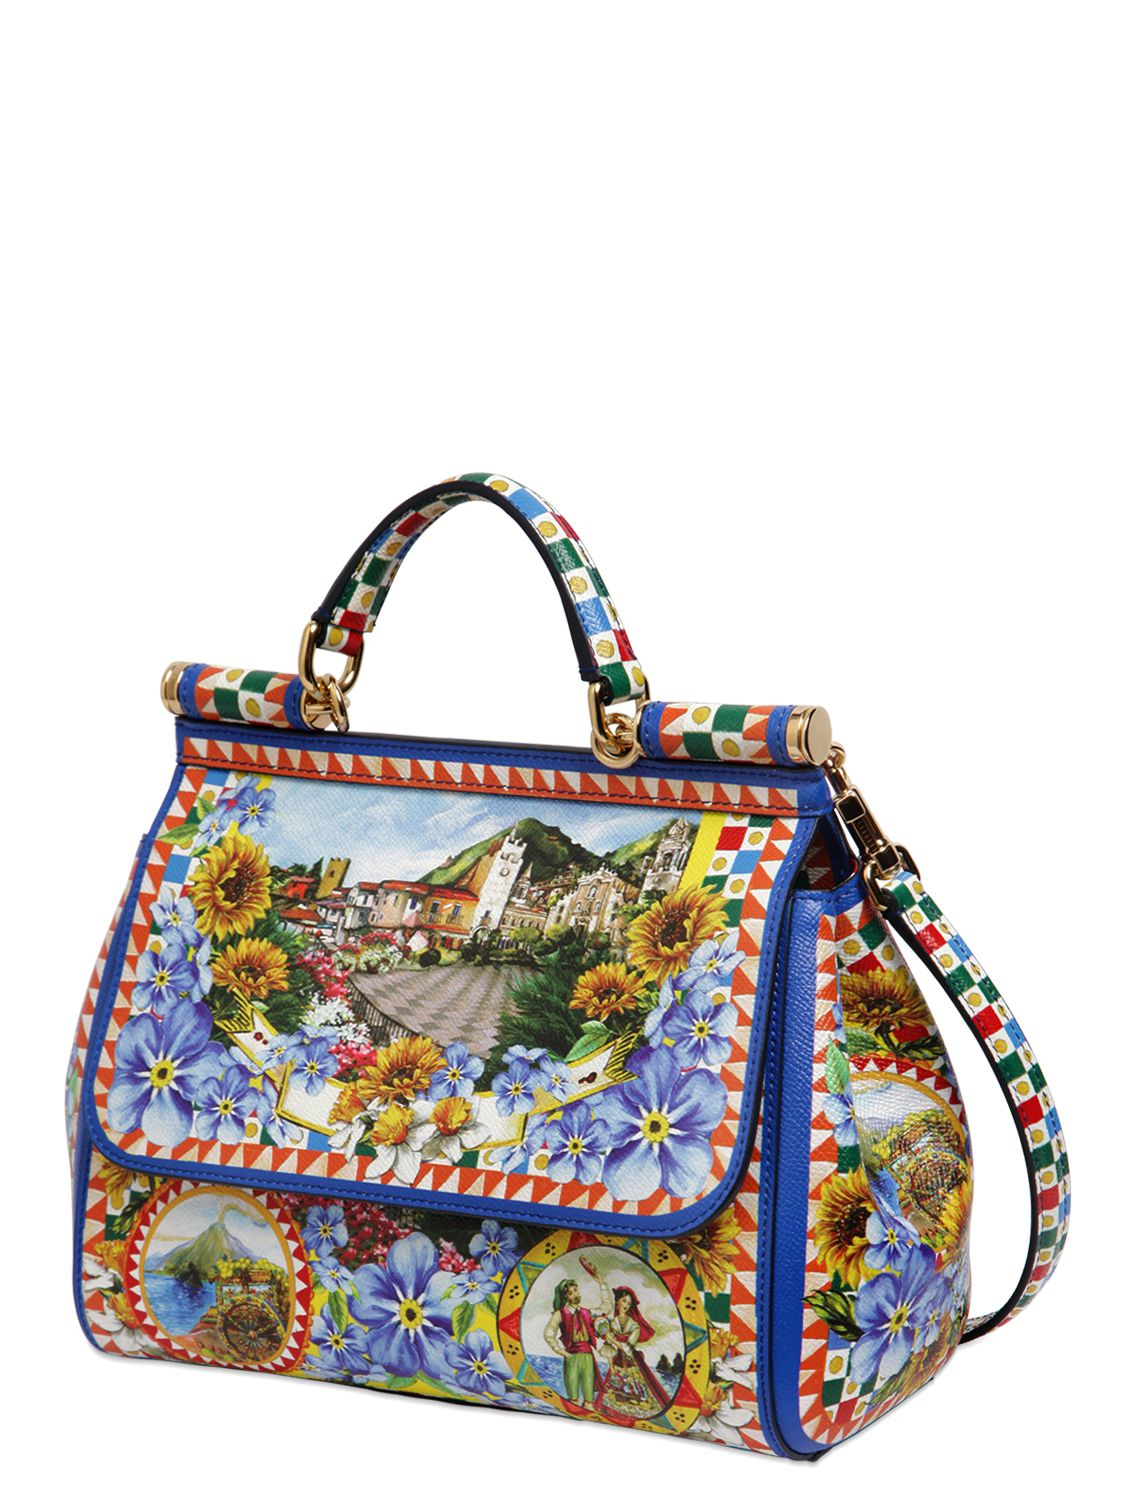 Dolce & Gabbana Medium Sicily Sicilia Print Leather Bag - Lyst